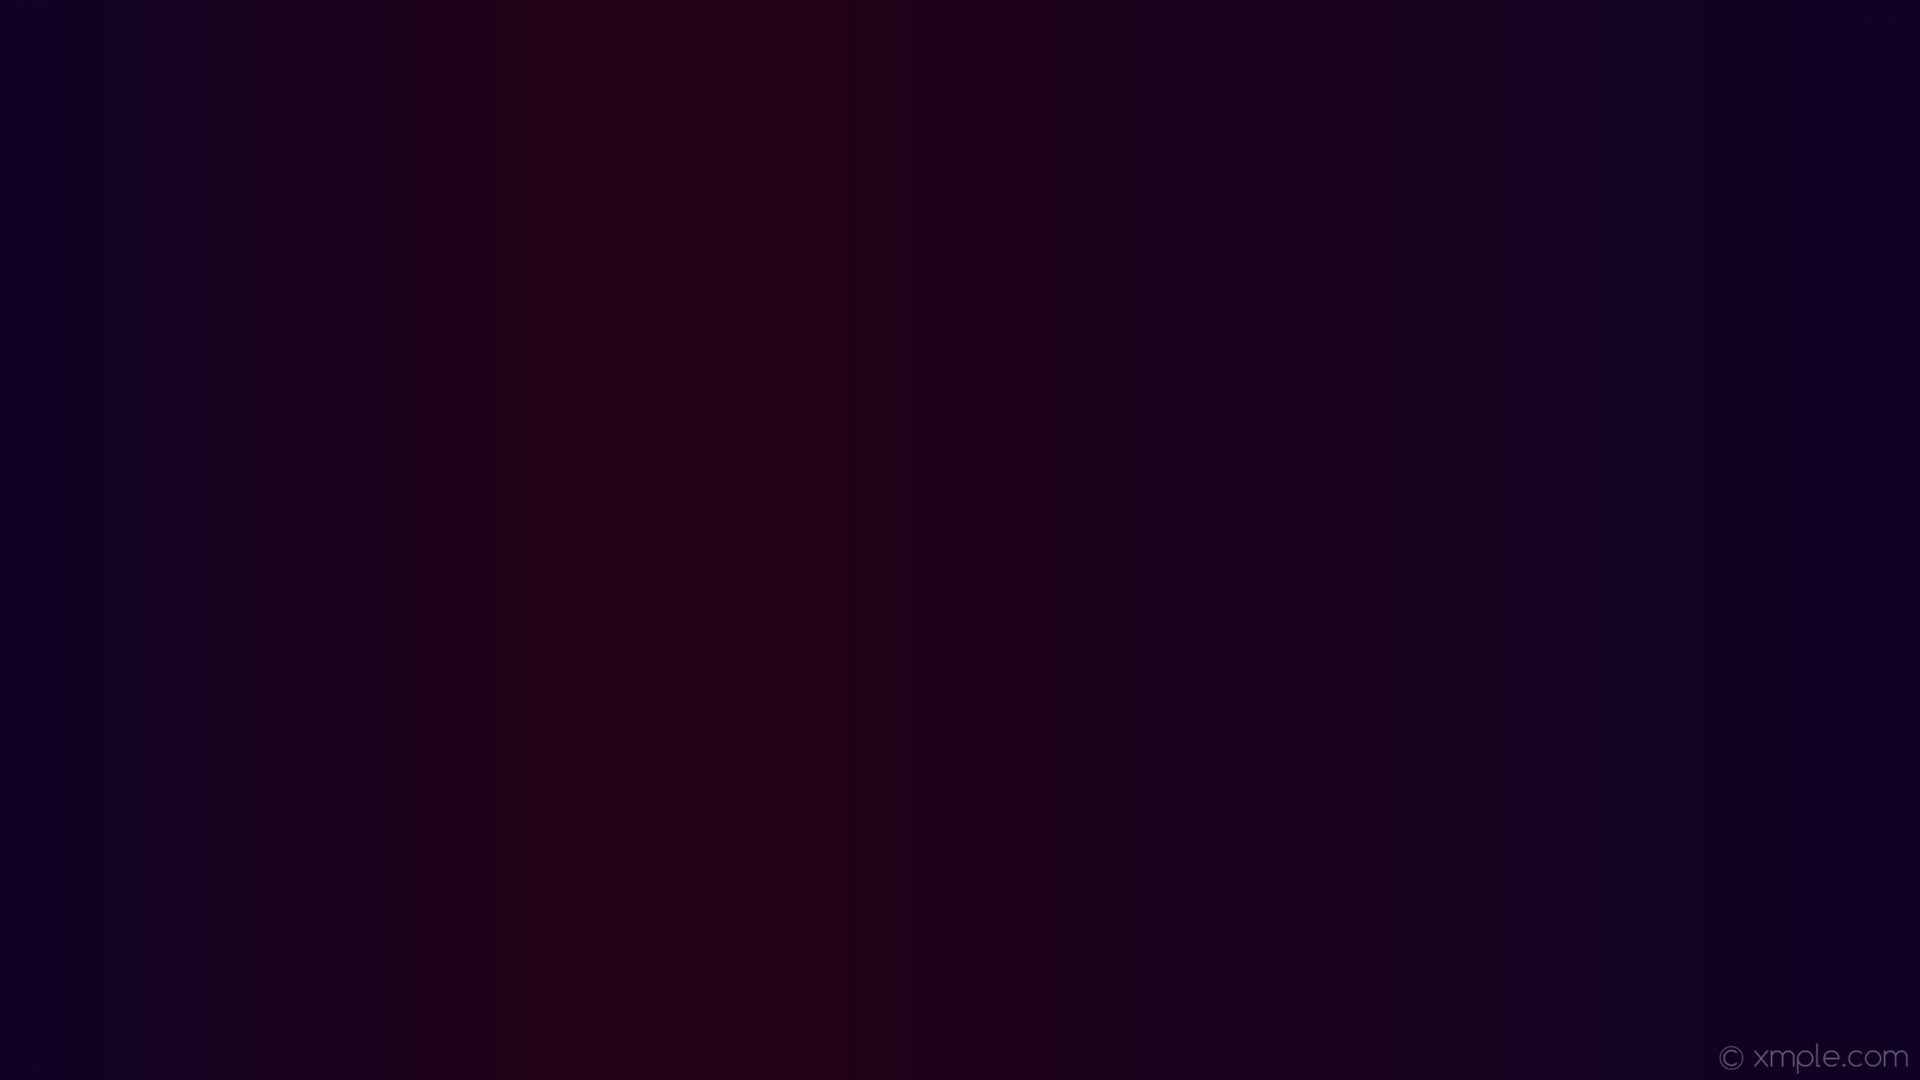 1920x1080 wallpaper linear highlight violet pink gradient dark violet dark pink  #0f0224 #240216 0Â°